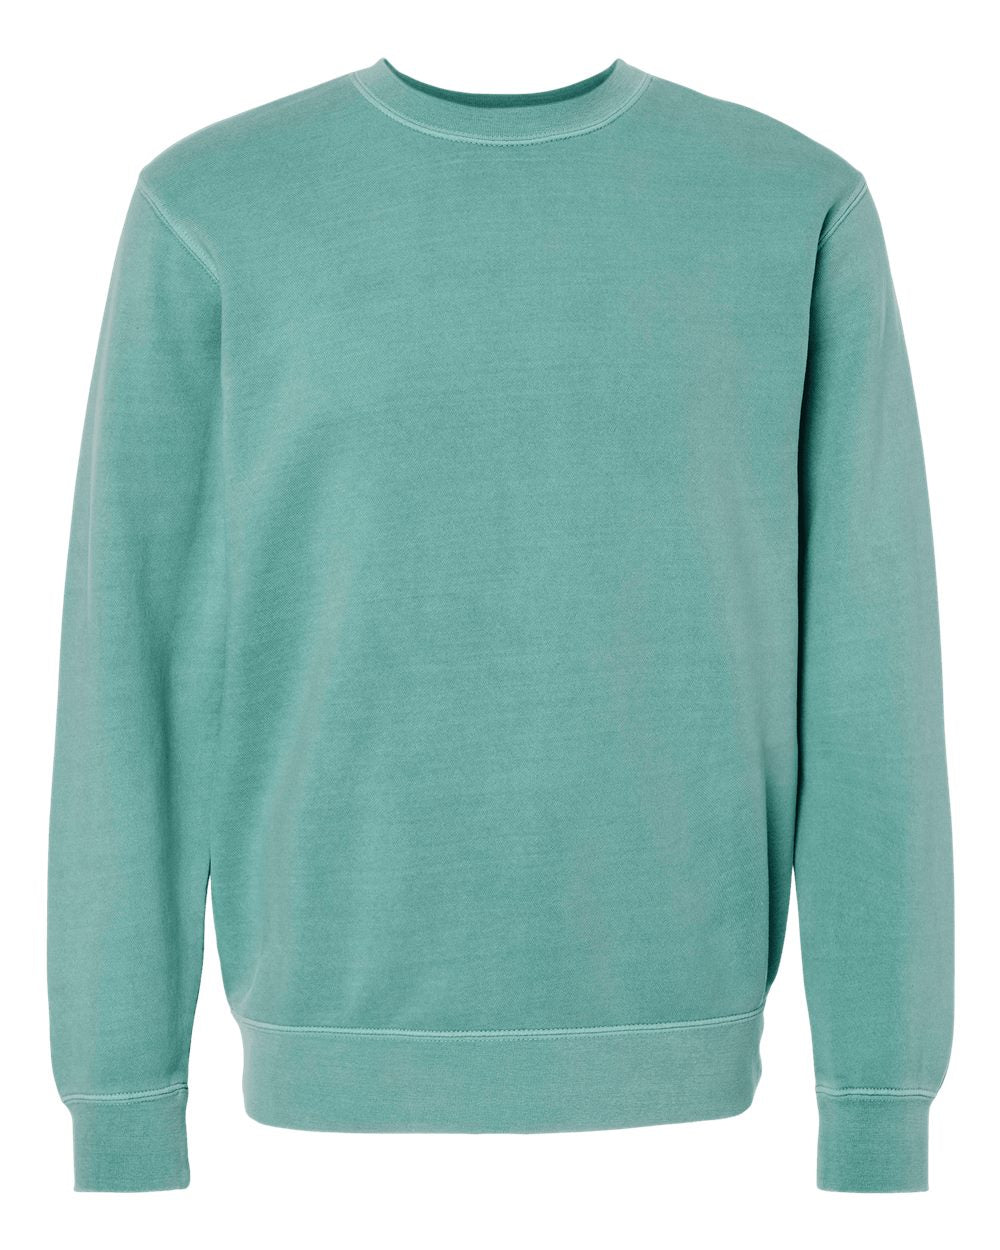 Independent Pigment-Dyed Crewneck Sweatshirt (PRM3500) in Pigment Mint